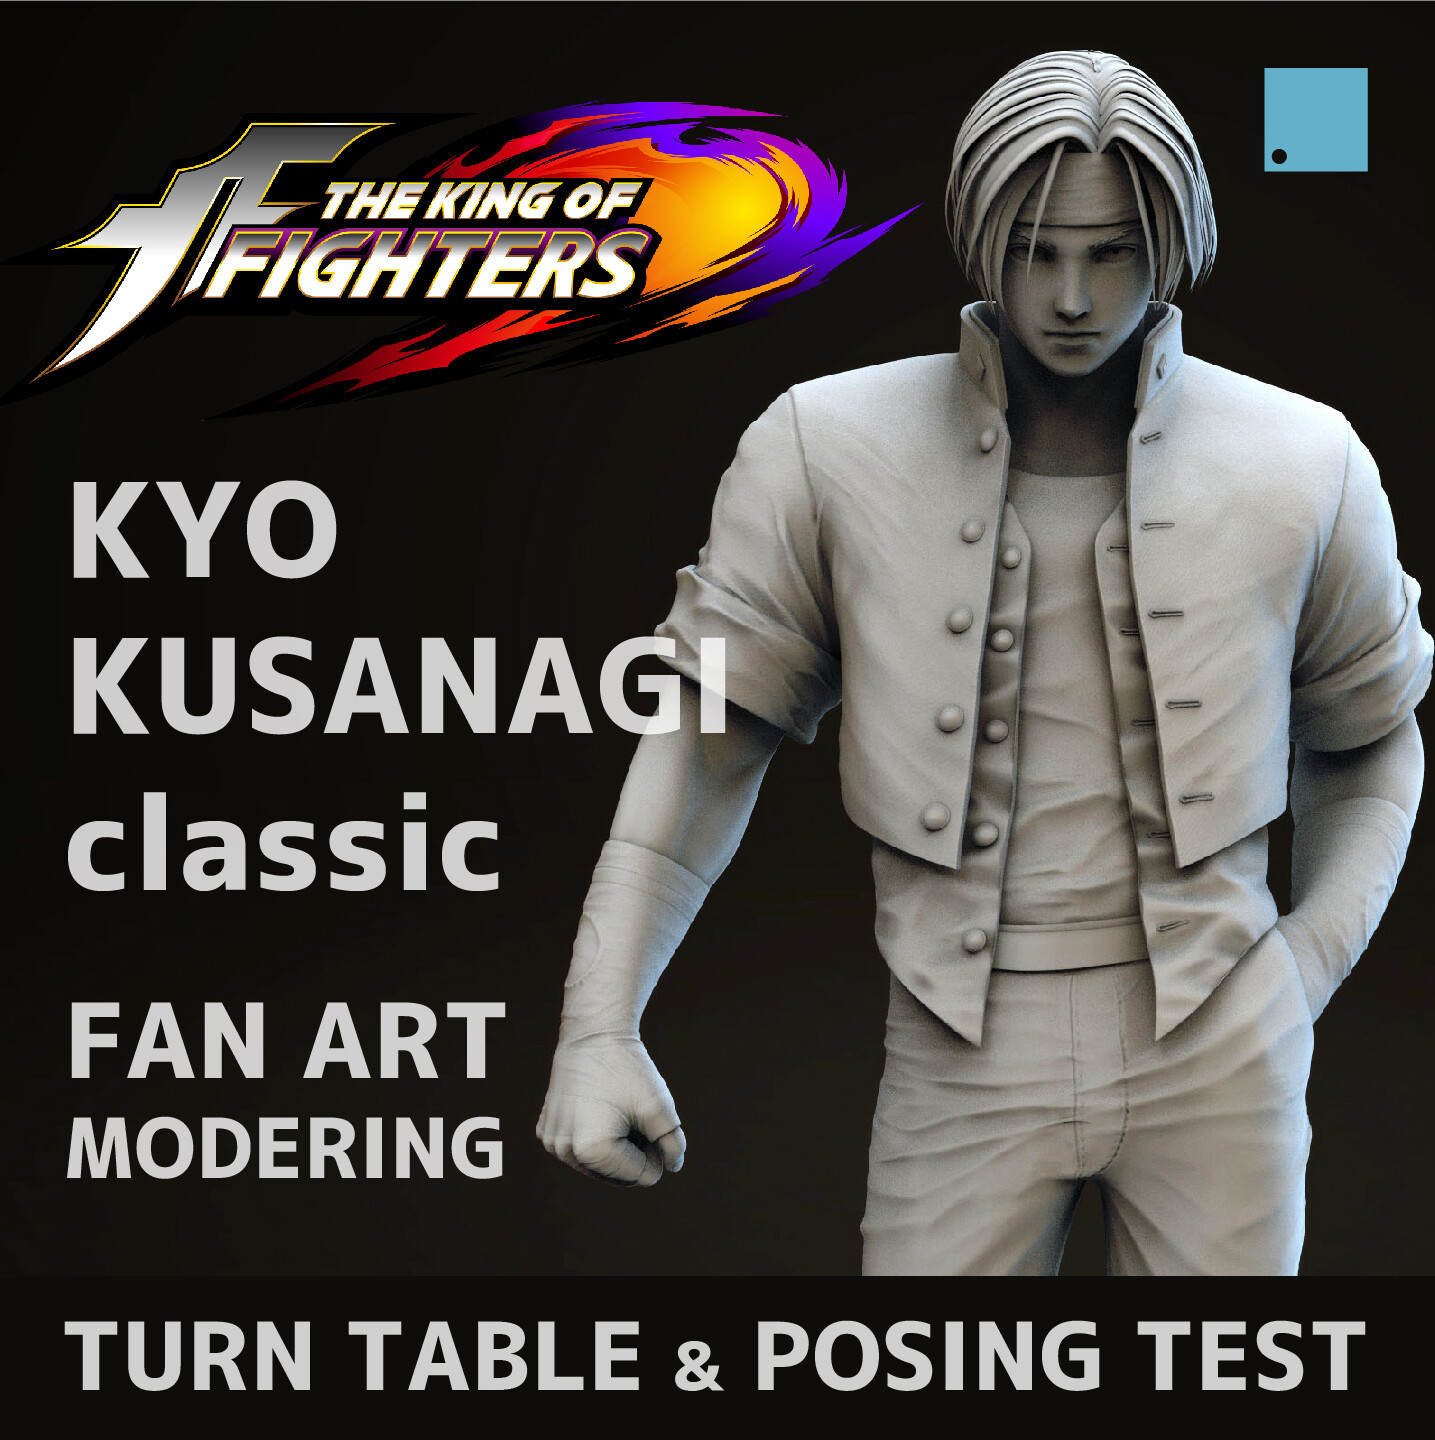 ArtStation - THE KING OF FIGHTERS KYO KUSANAGI